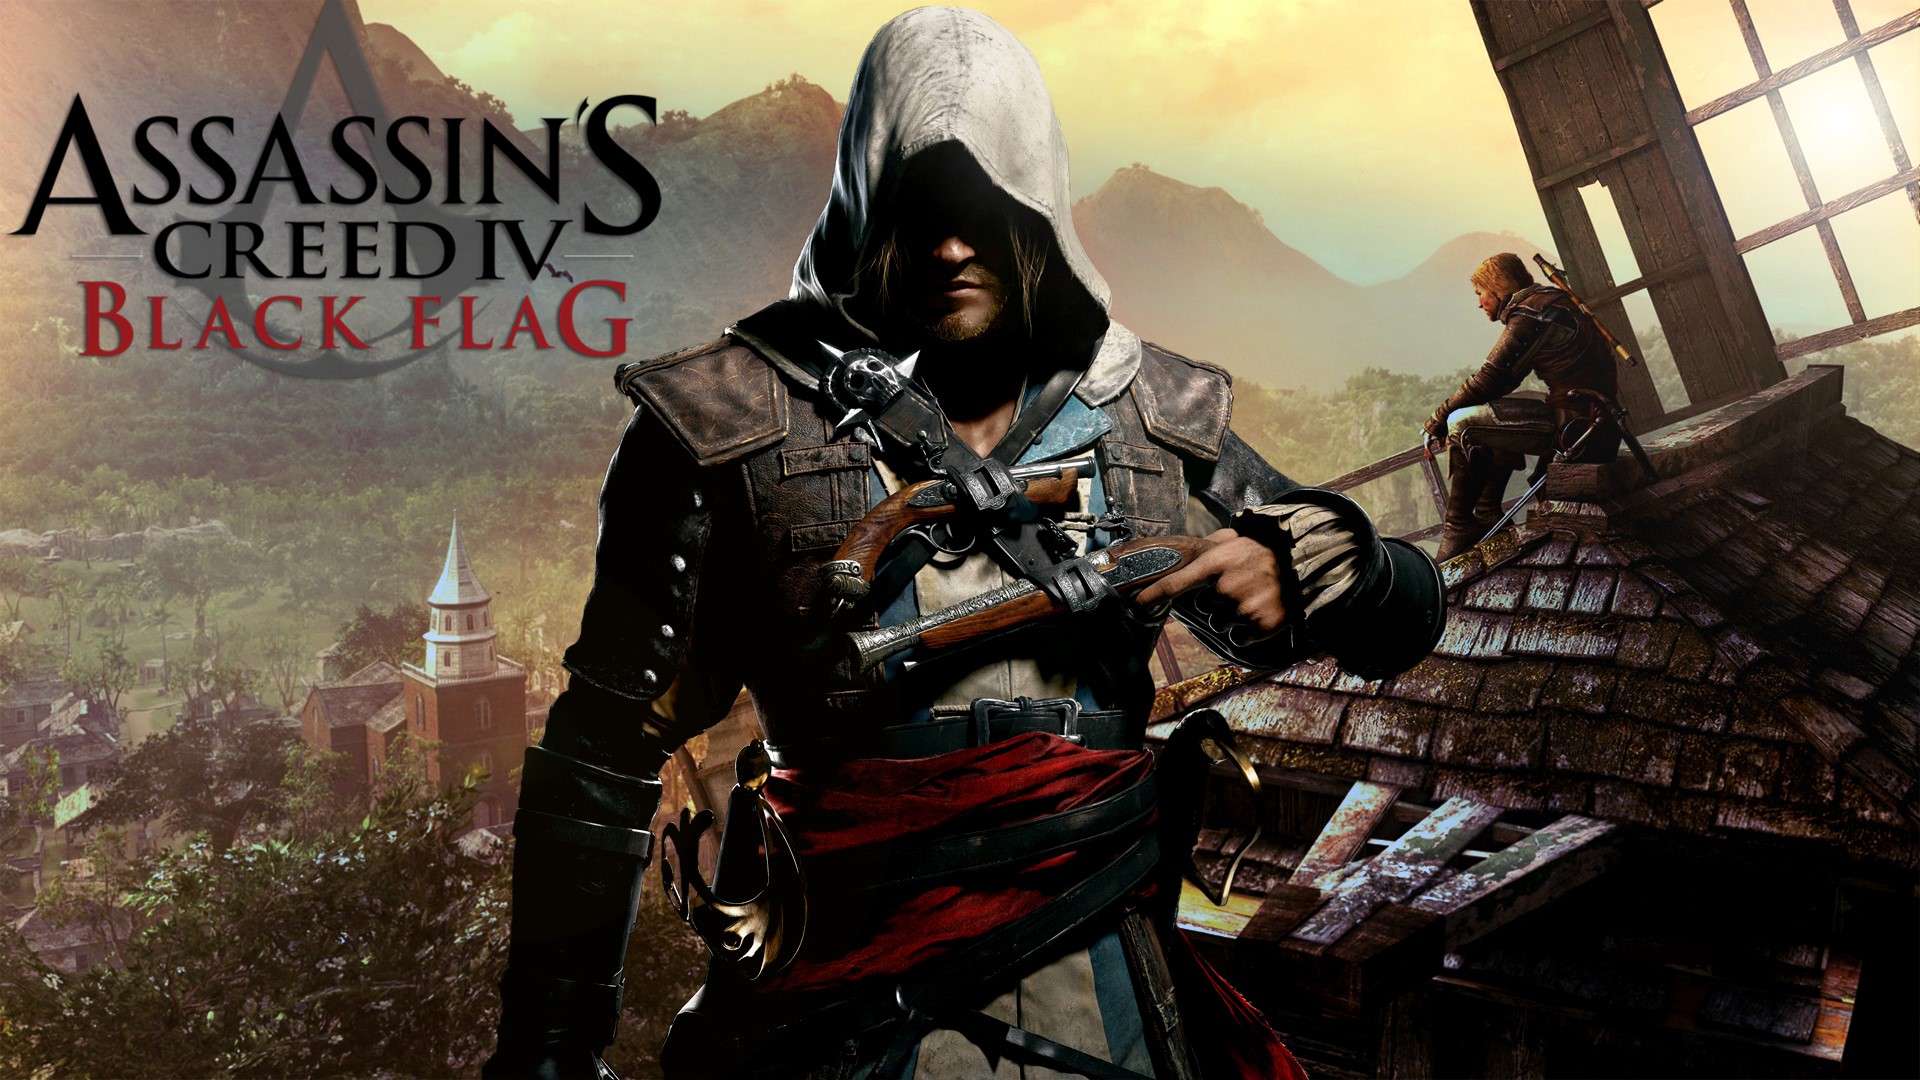 Assasın creed 4. Ассасин Крид 4 черный флаг. Assassin’s Creed IV: Black Flag – 2013. Ассасин Крид Блэк флаг игра. Assassin's Creed 4 Black Flag обложка.